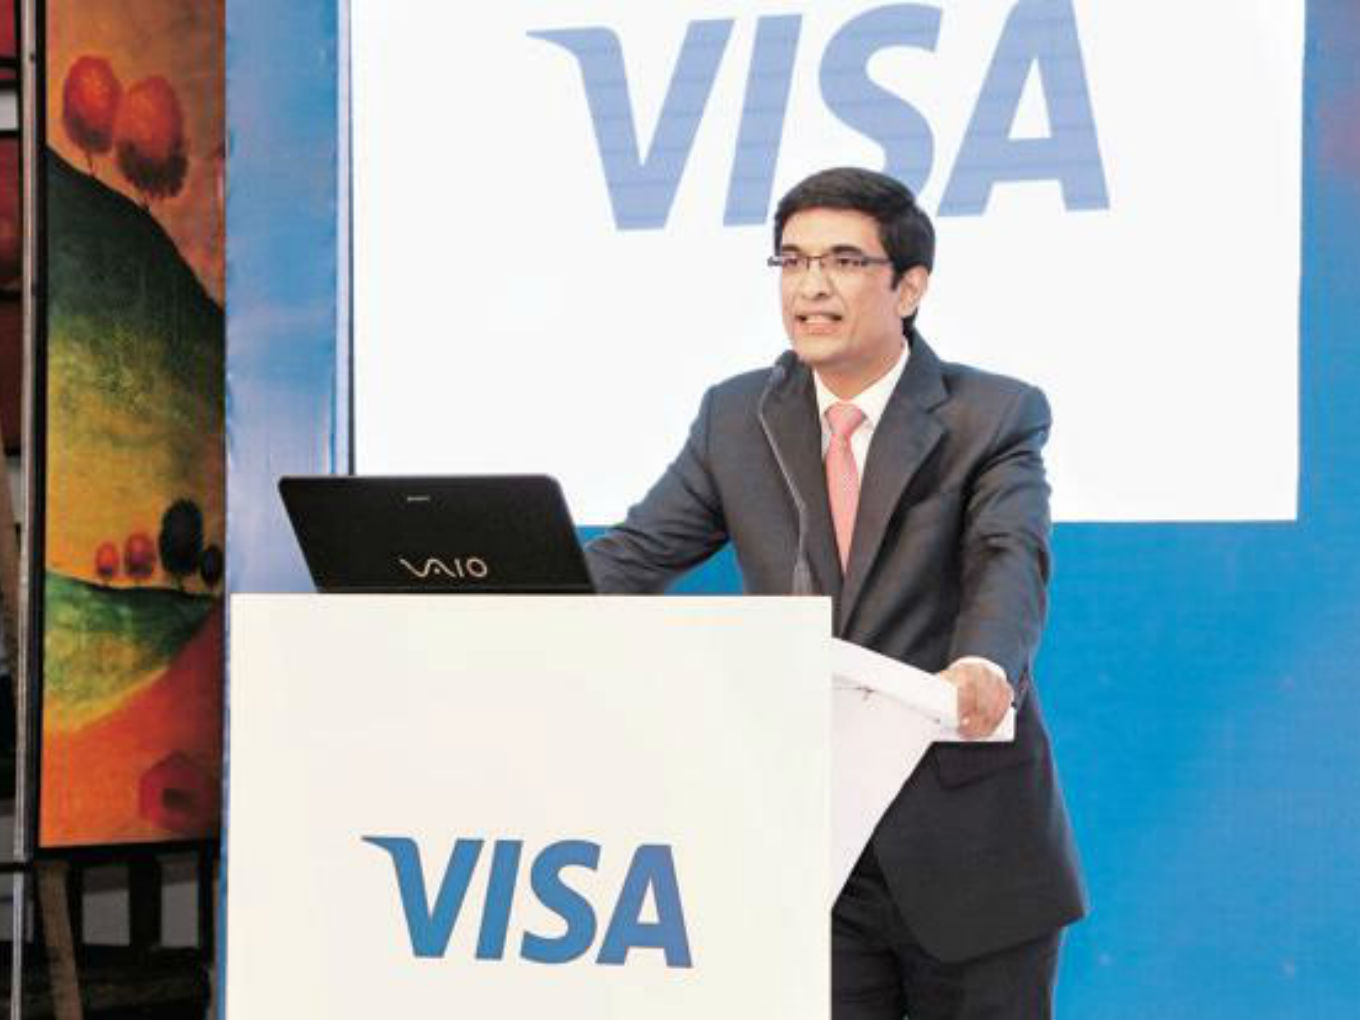 Visa India Head Says Logic Behind No-Fee Debit Card Transactions Is “Fallacious”